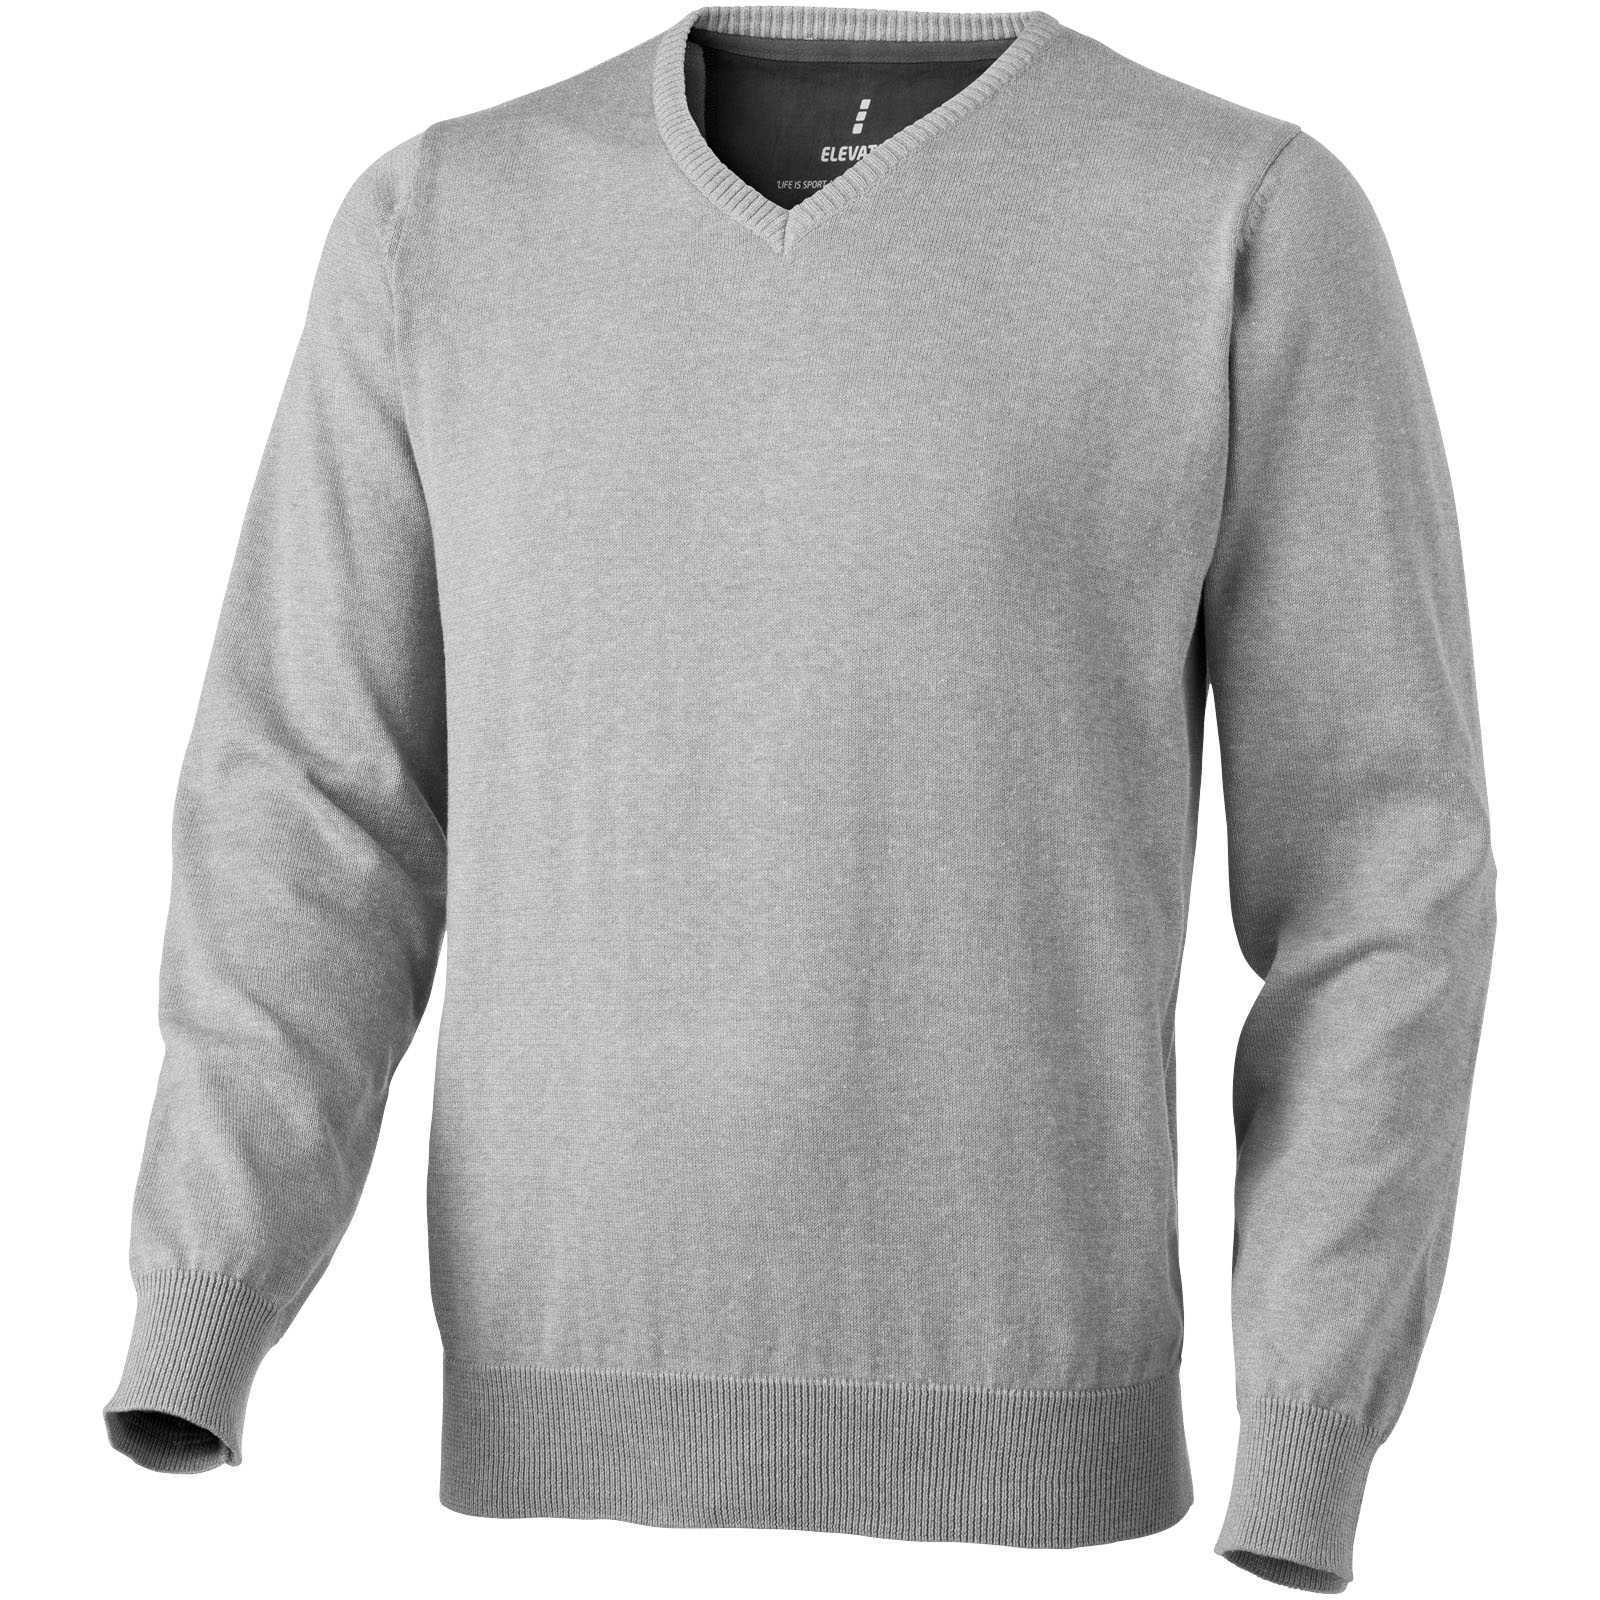 Suéter con cuello en V contrastado - Littledean - Sobrado